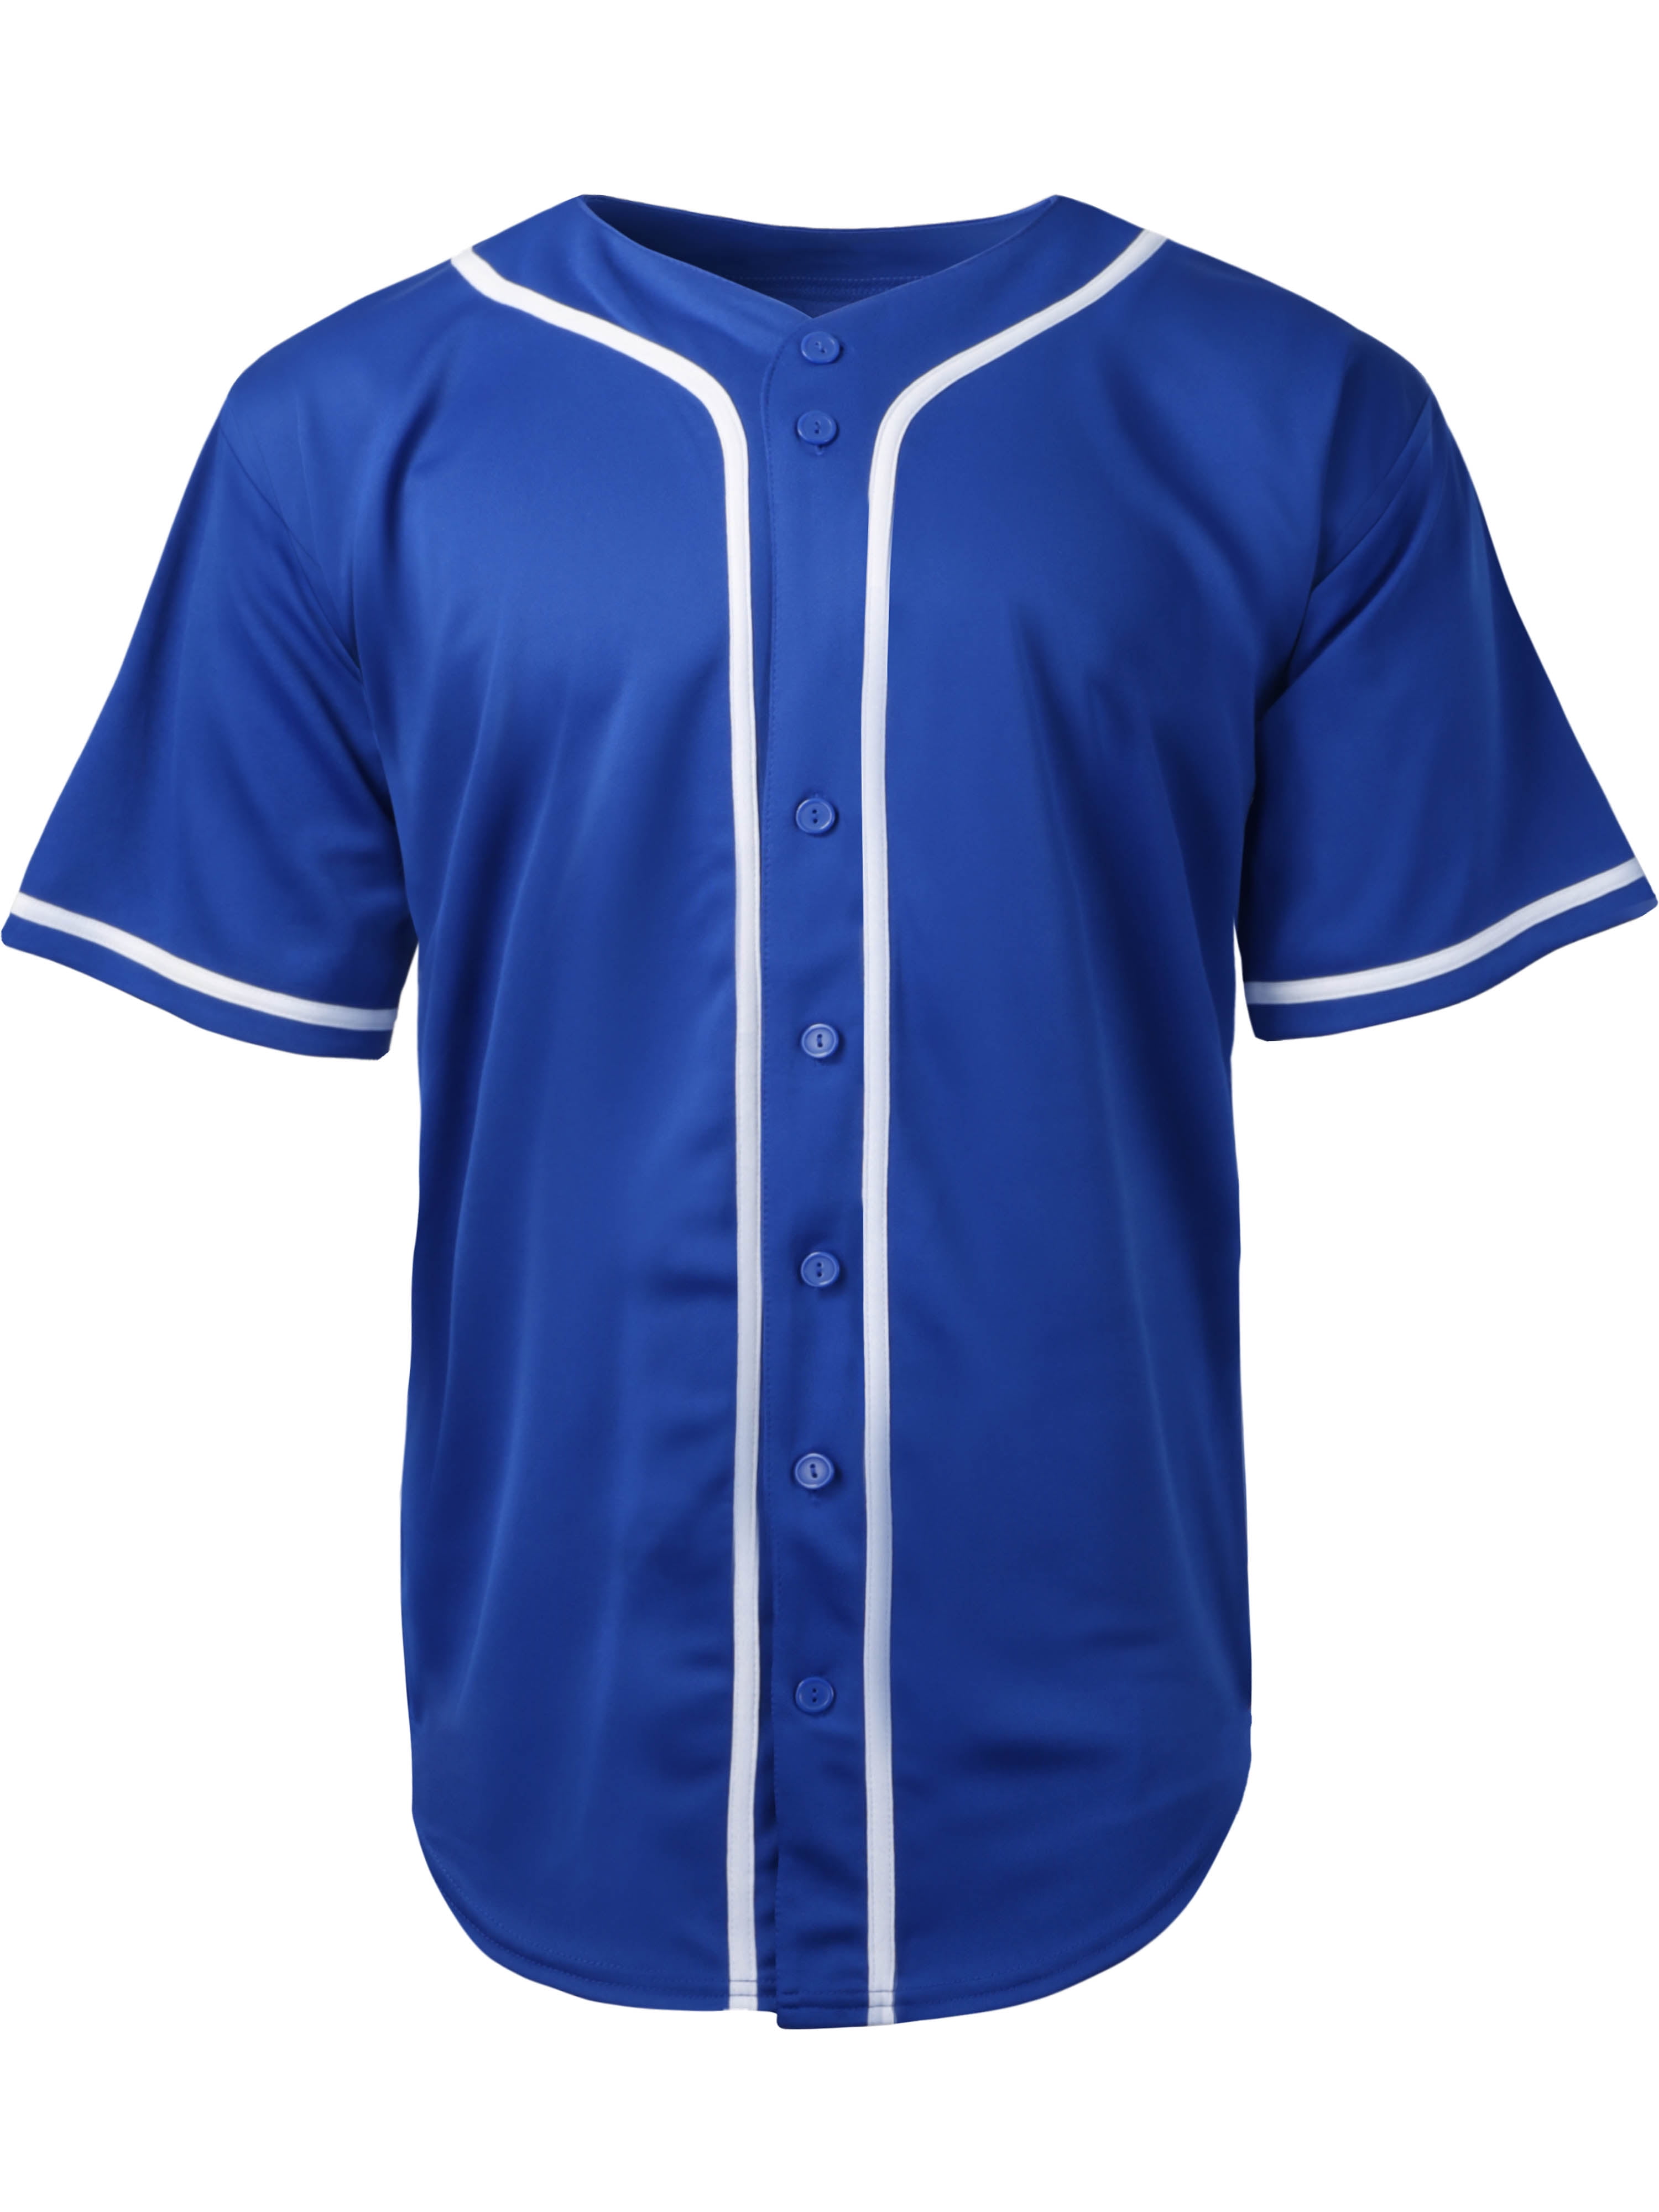 T Shirts Baseball Jersey Uniform Plain Short Sleeve Button Team Sports Mens Kid 